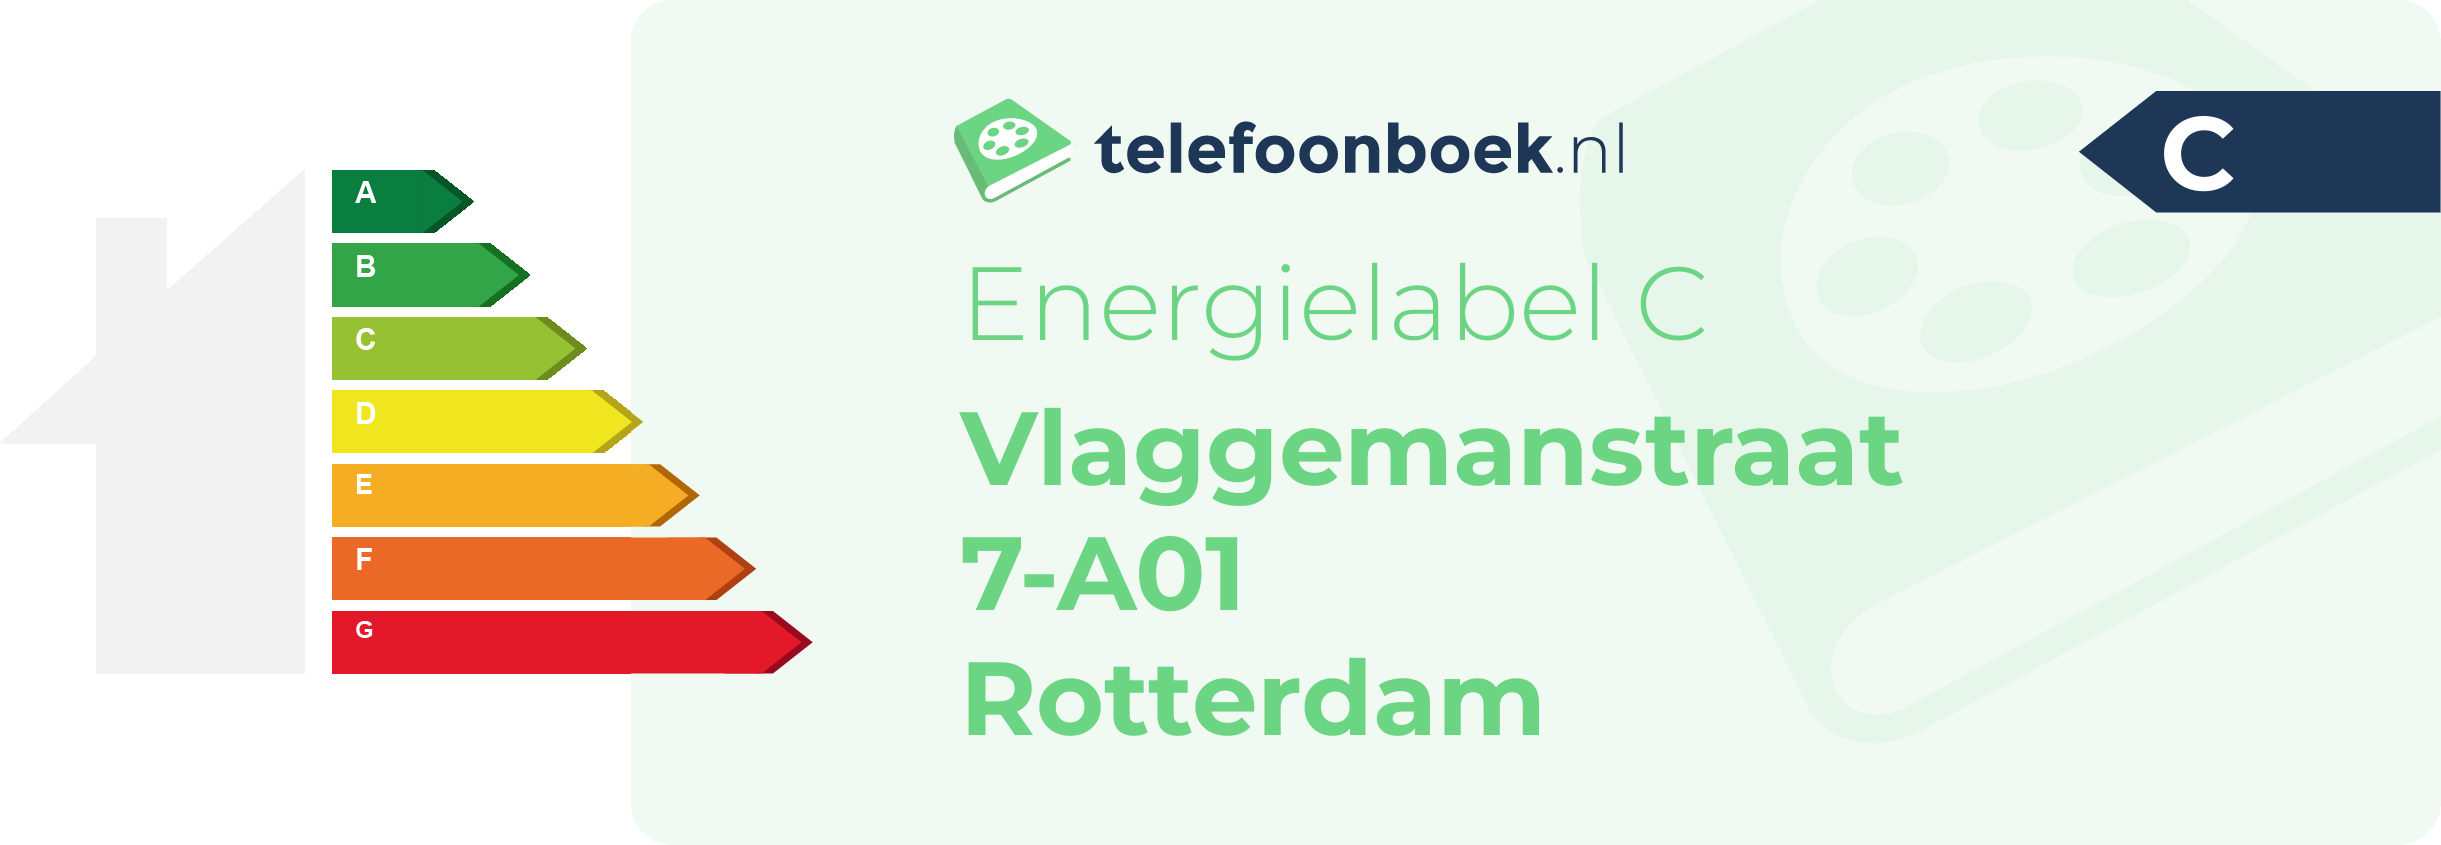 Energielabel Vlaggemanstraat 7-A01 Rotterdam